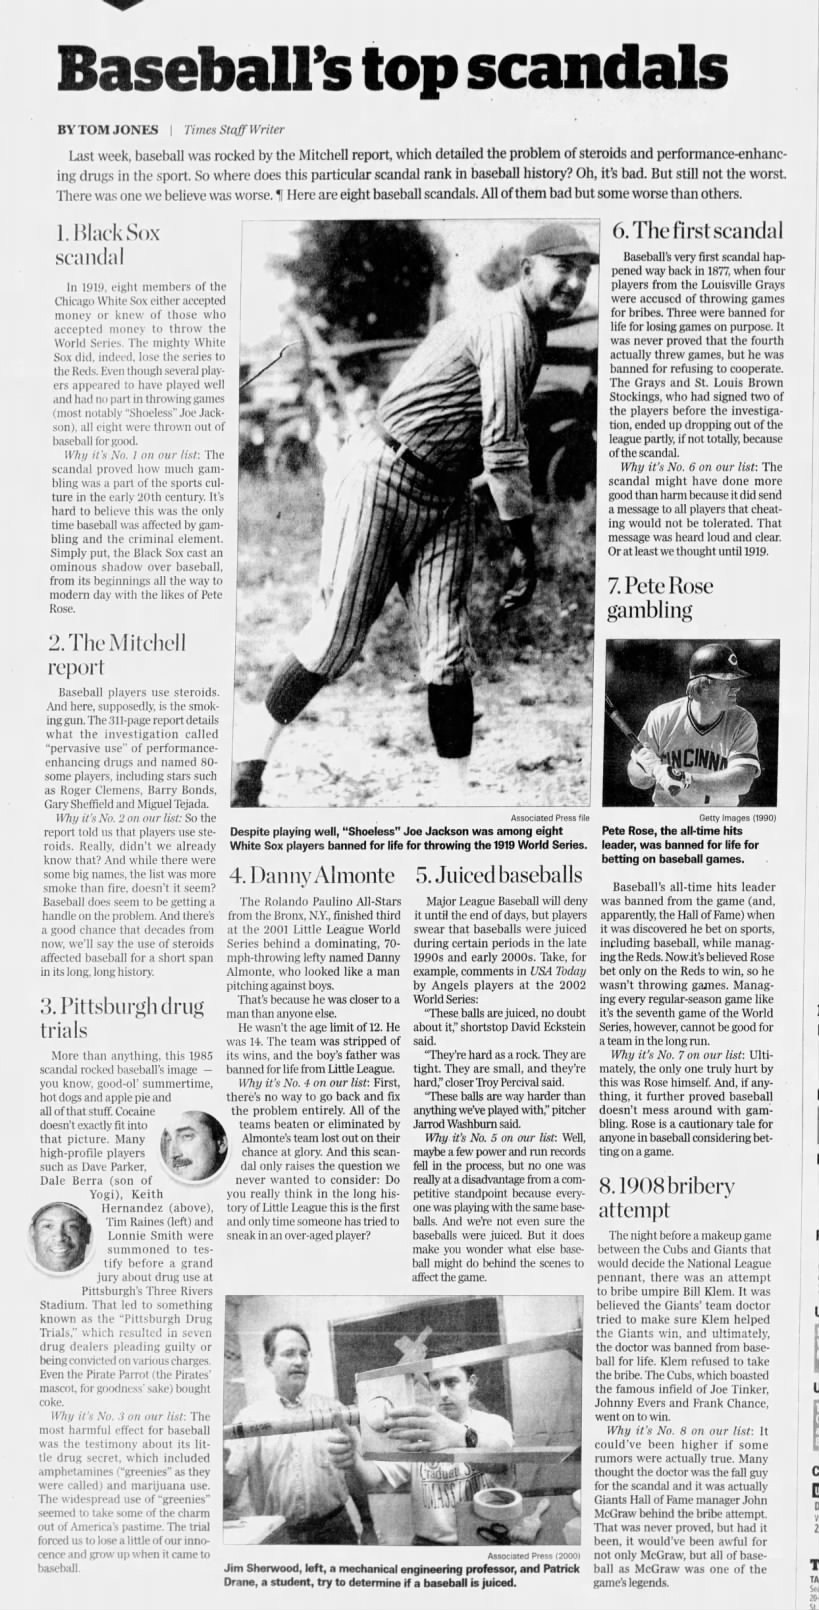 Baseball’s Top Scandals Dec 16, 2007 St. Pete Times